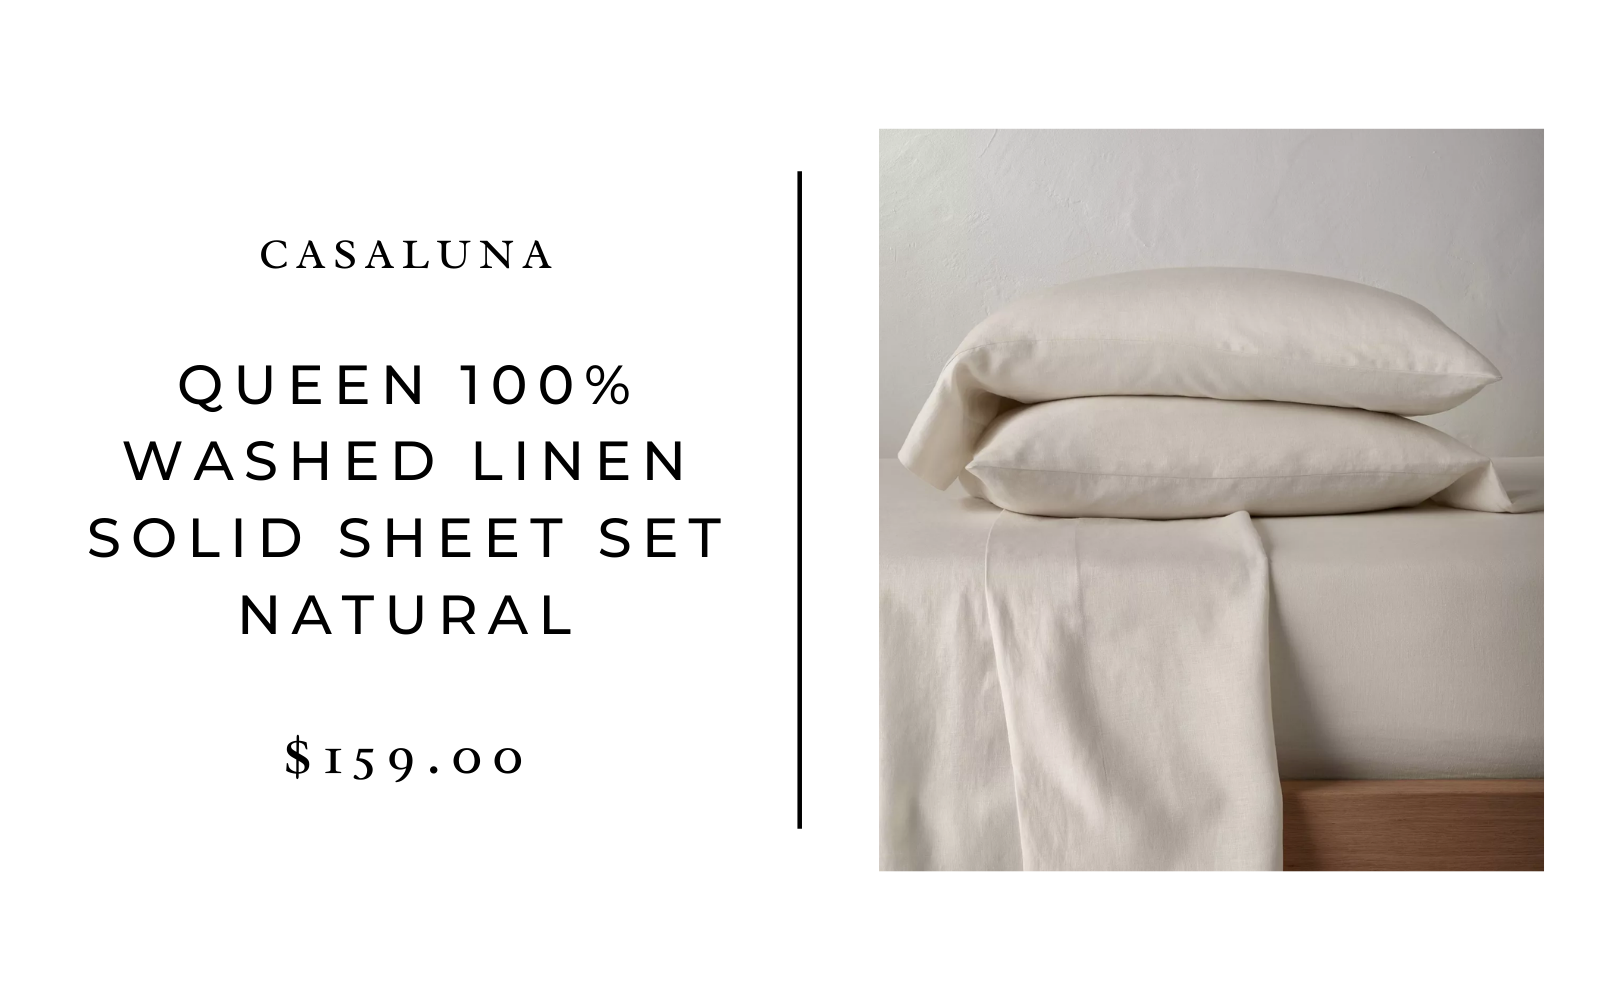 Casaluna Queen 100% Washed Linen Solid Sheet Set Natural